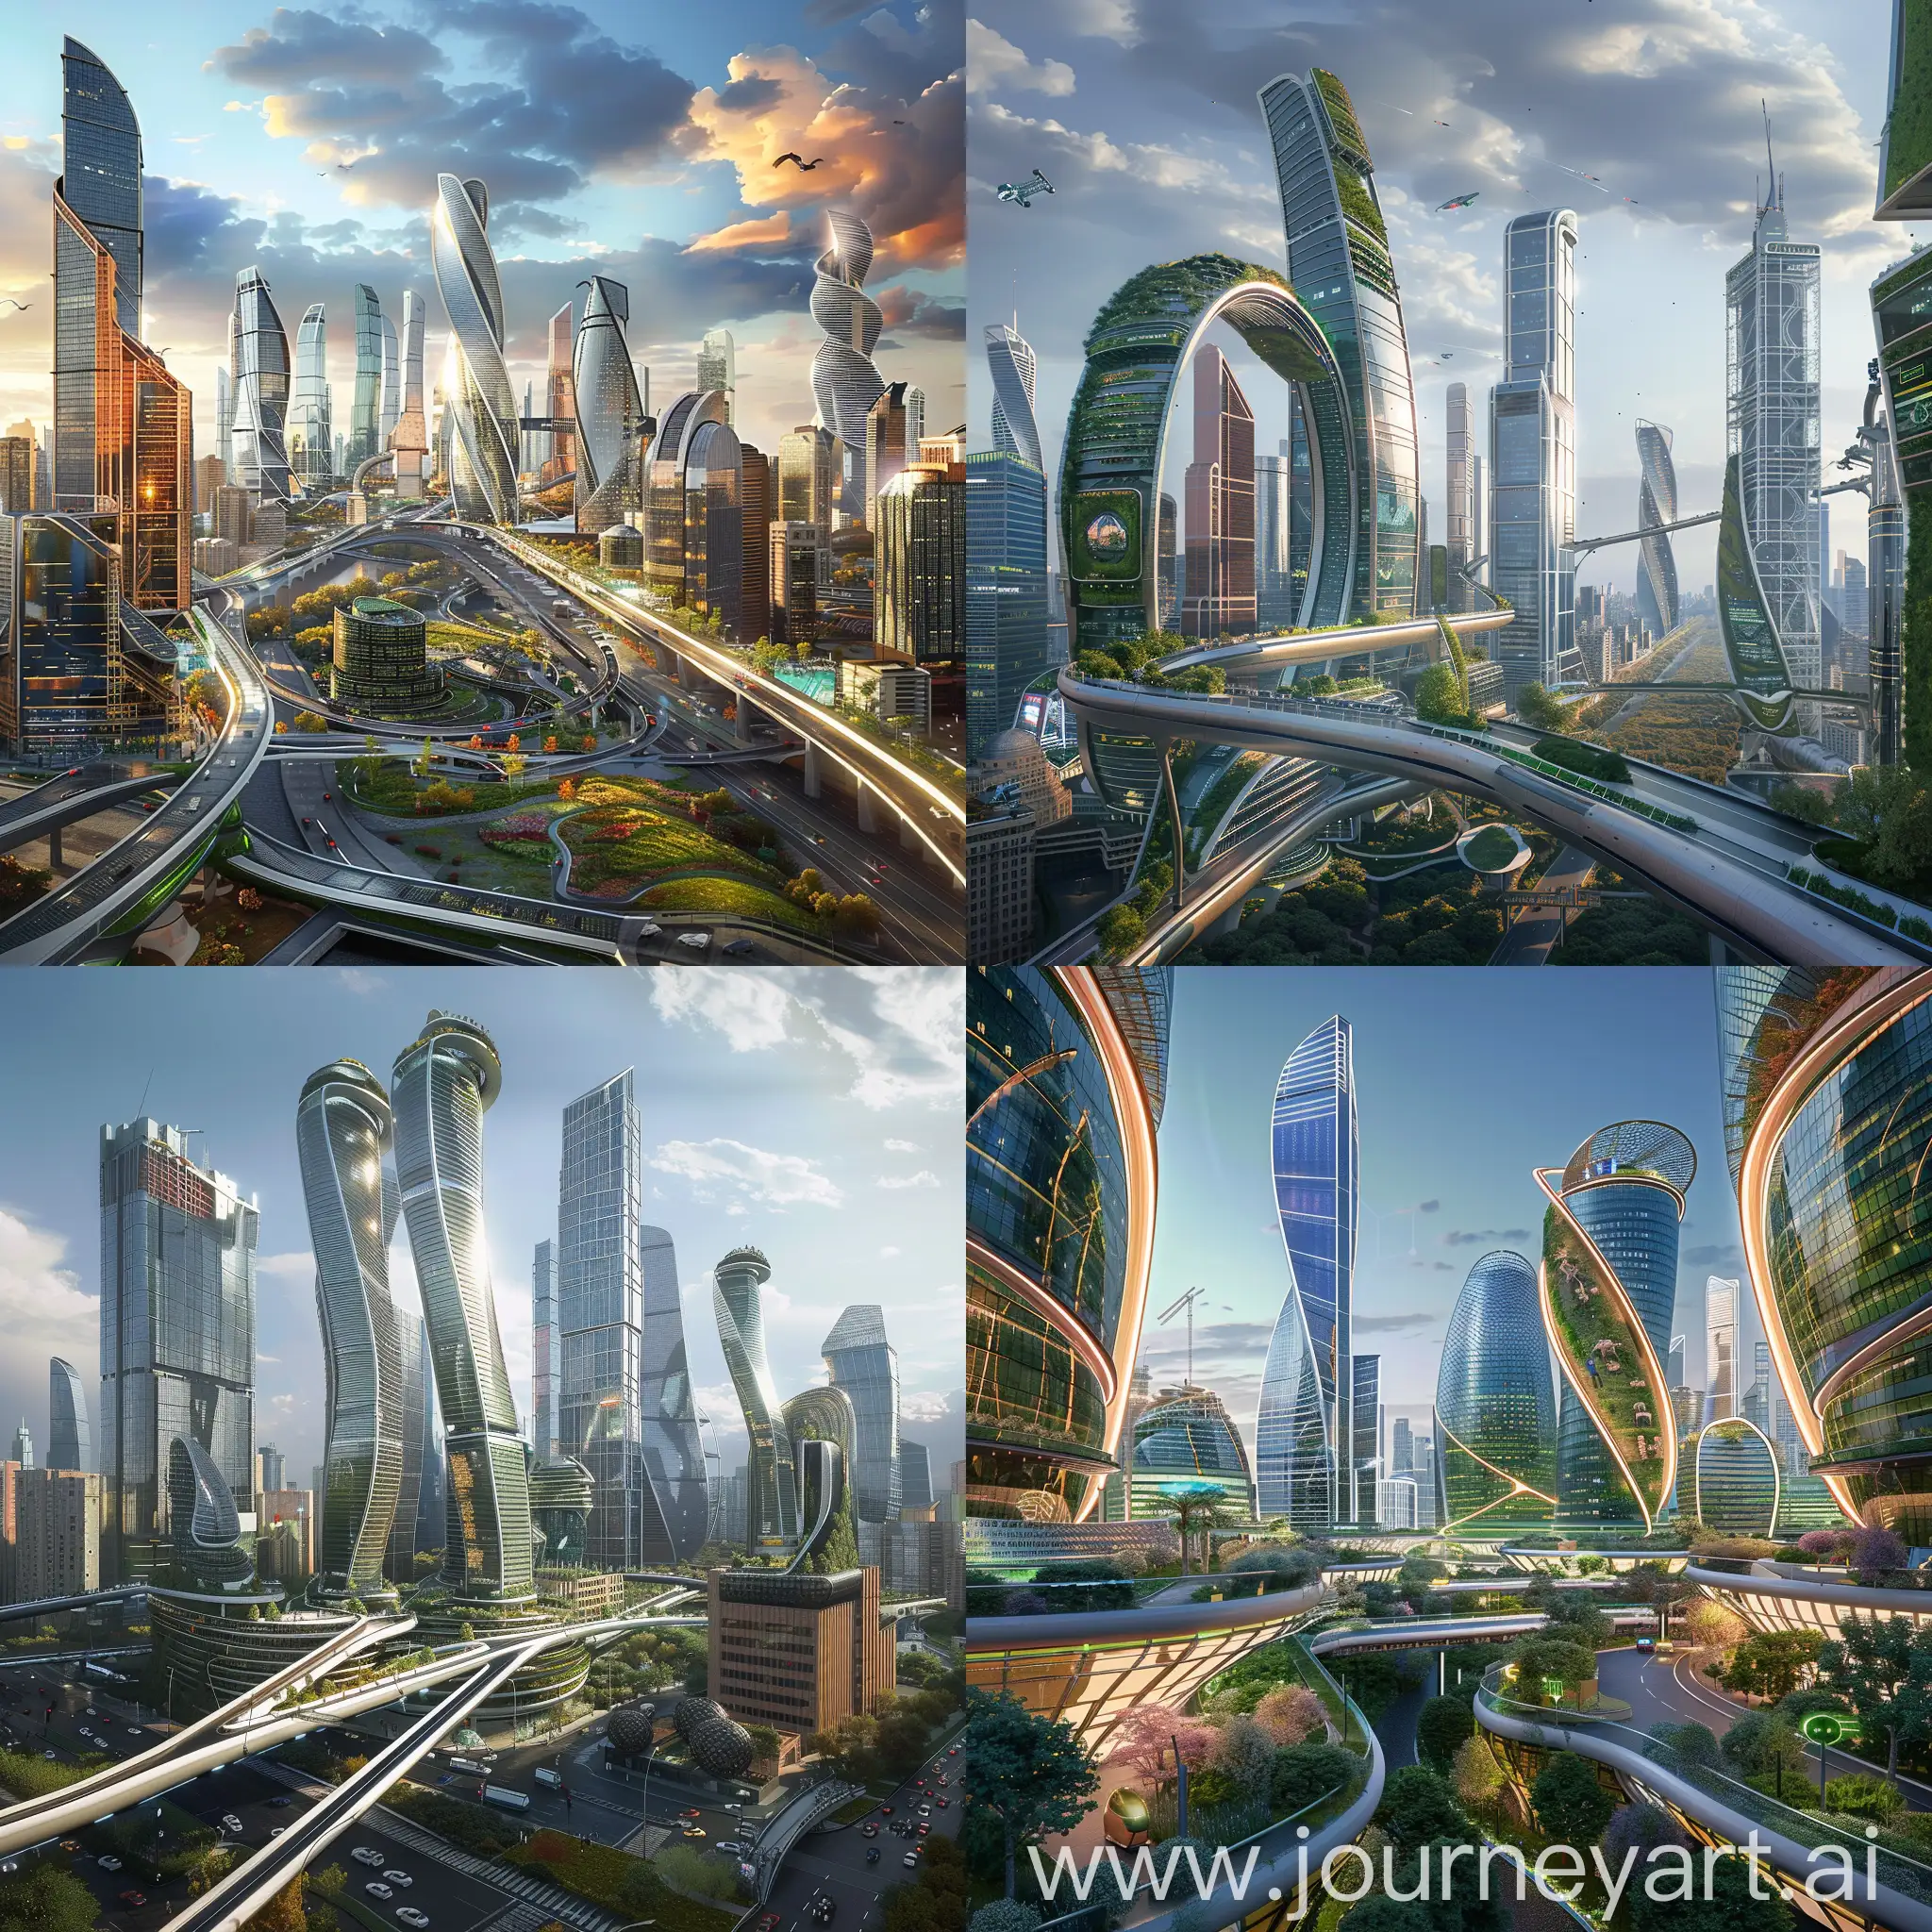 Futuristic-Moscow-Biometric-Apartments-Vertical-Gardens-Smart-Traffic